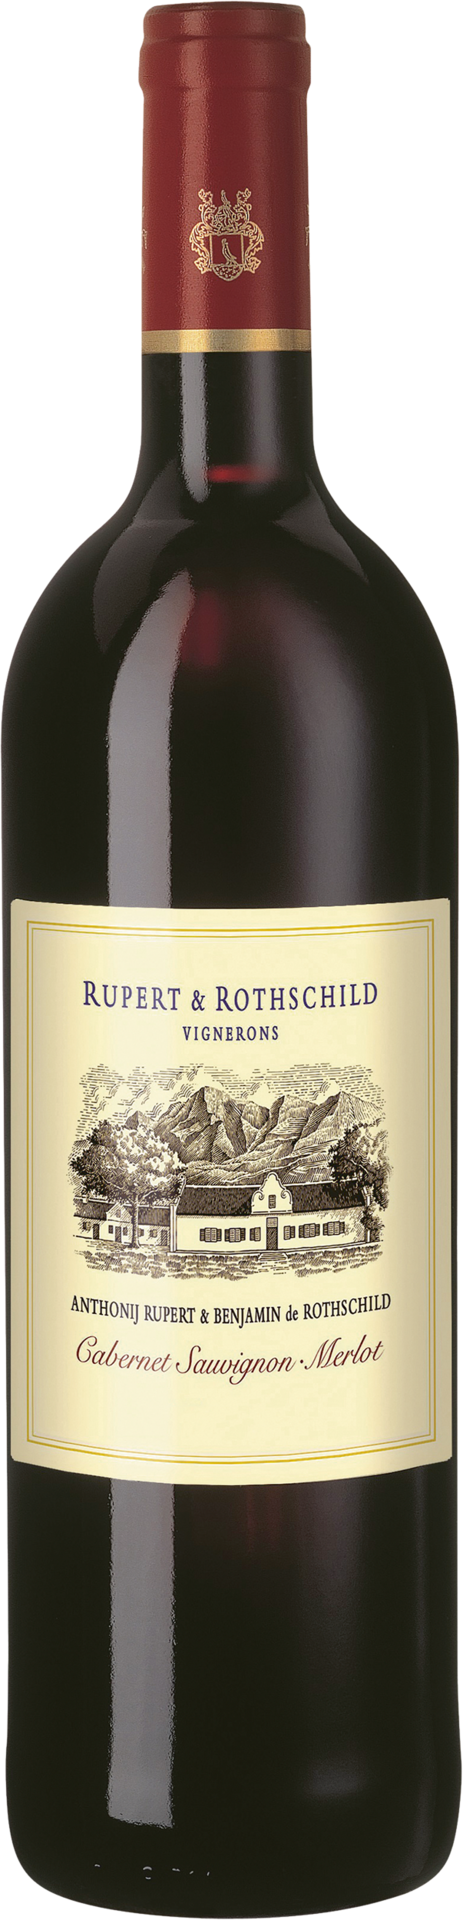 Rupert & Rothschild Cabernet Sauvignon - Merlot